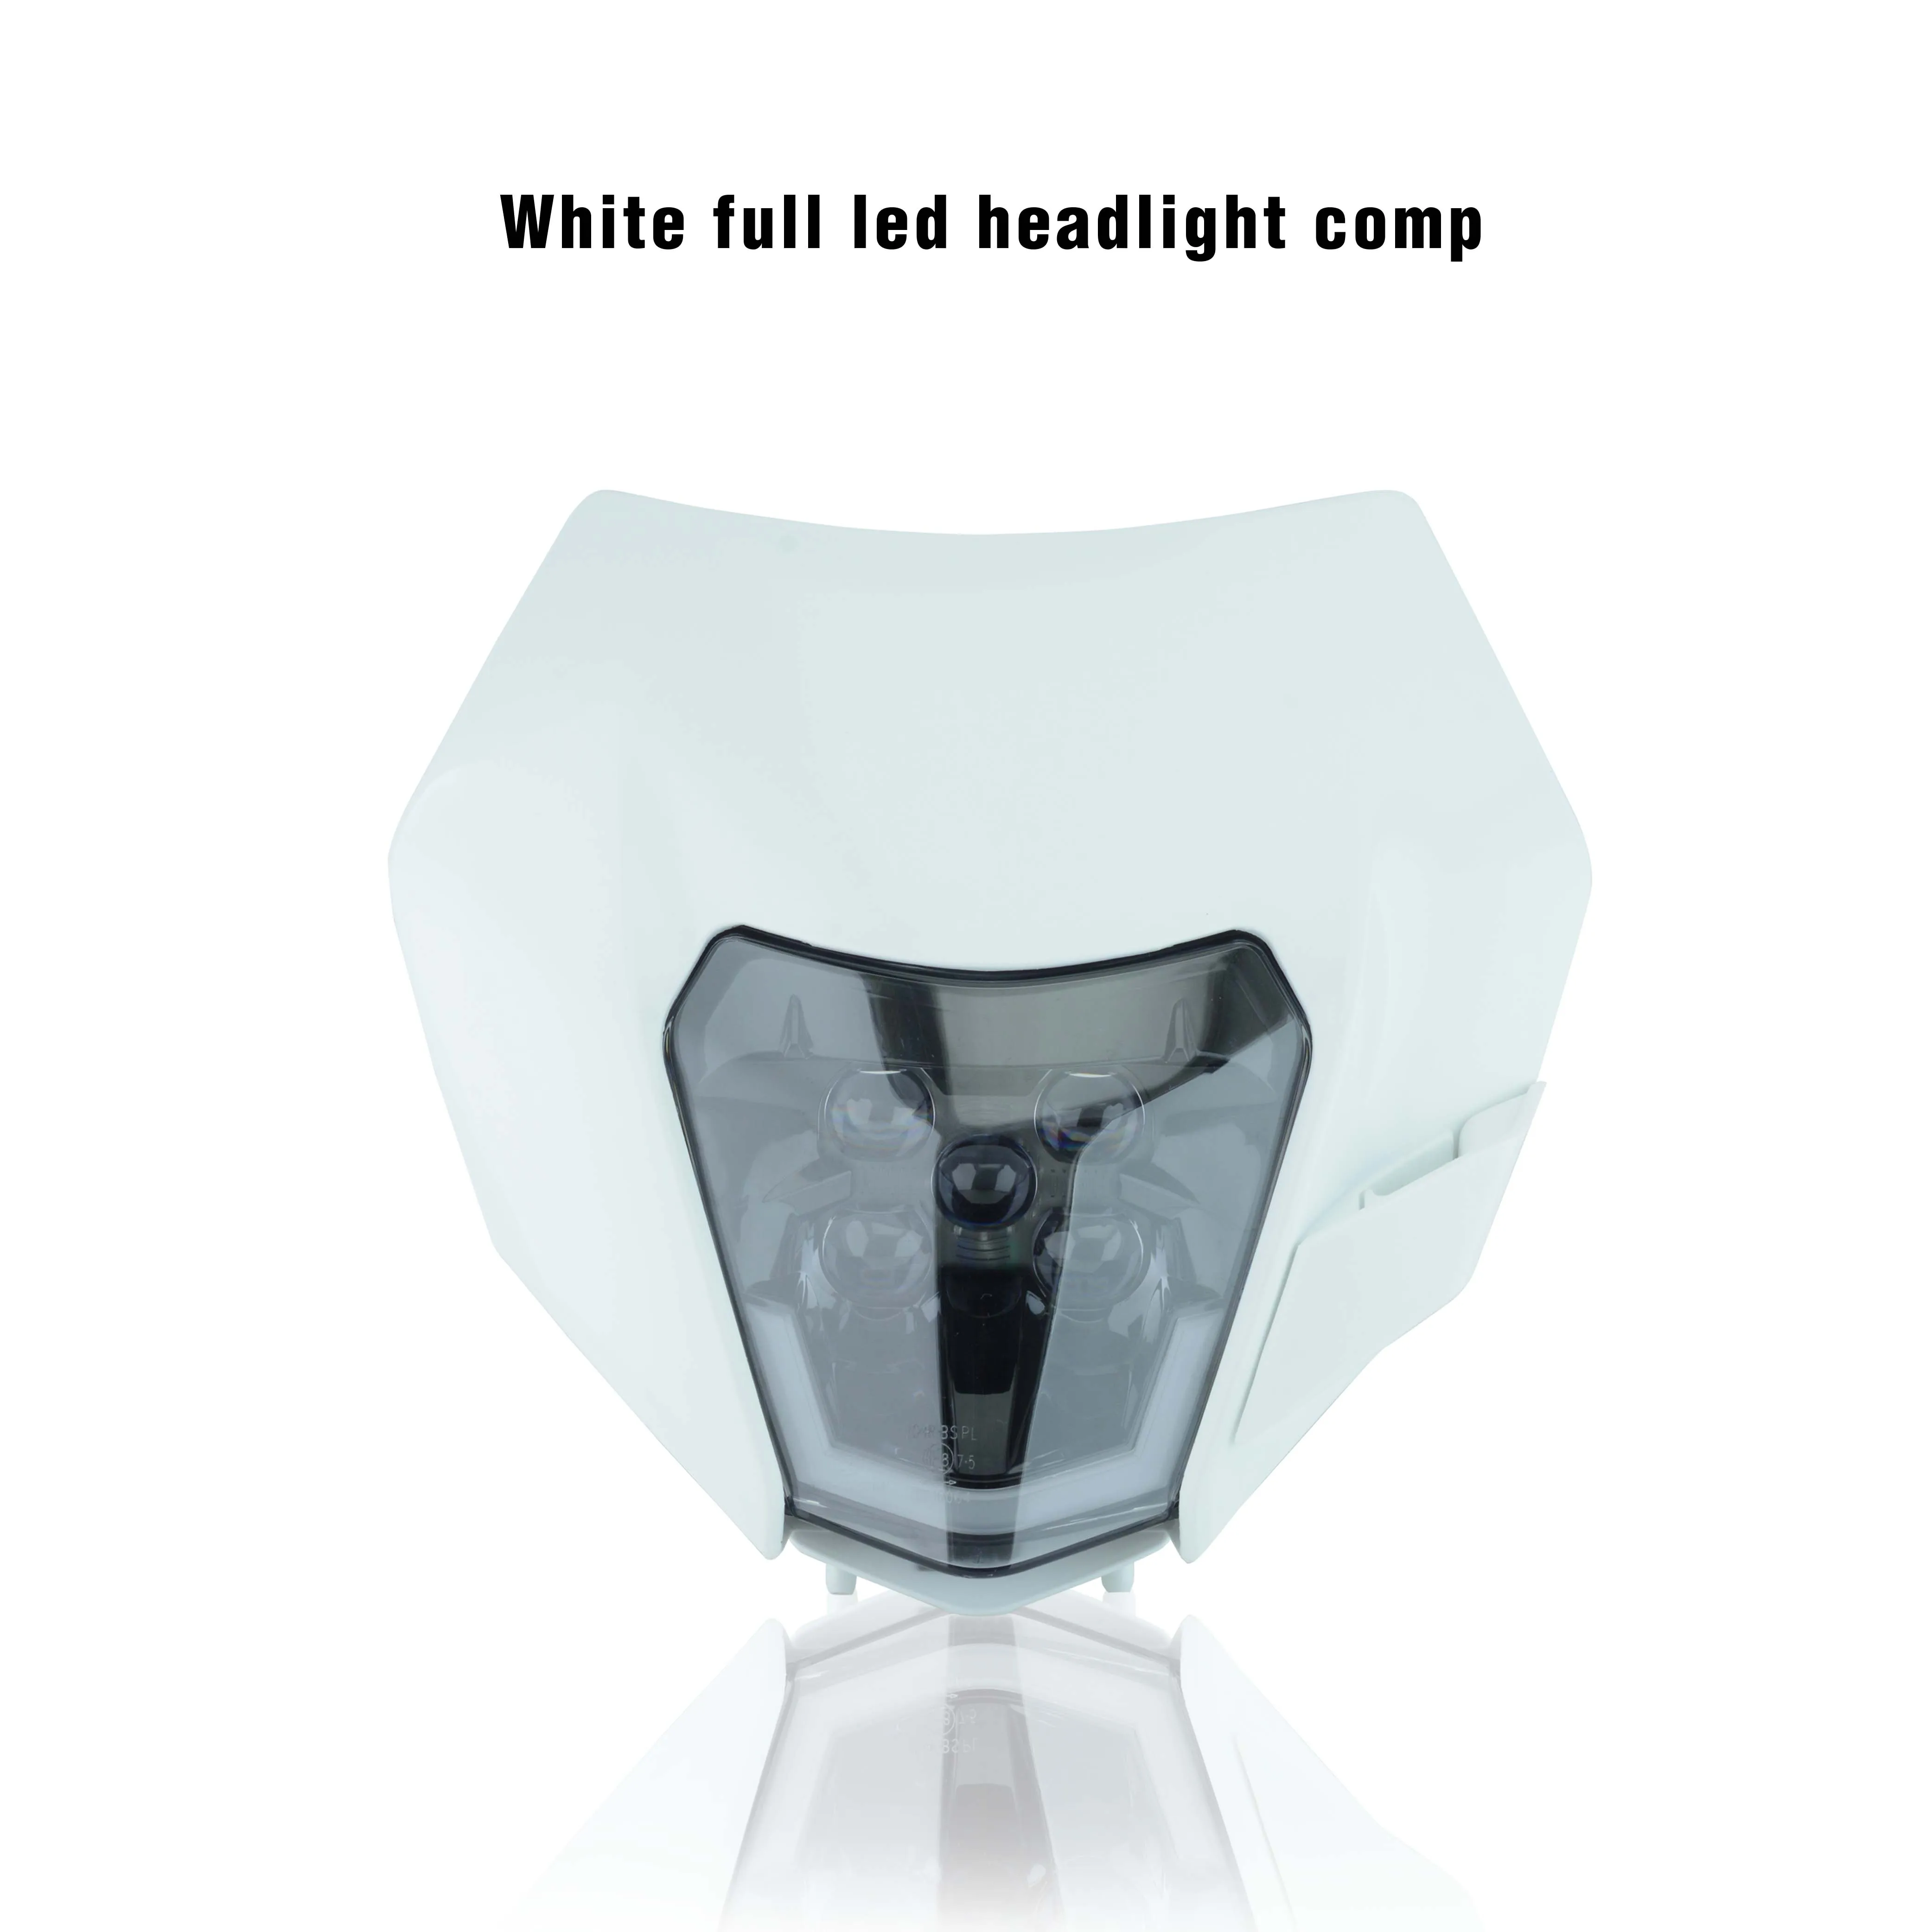 Plaque phare LEDs type KTM blanc (5 leds)